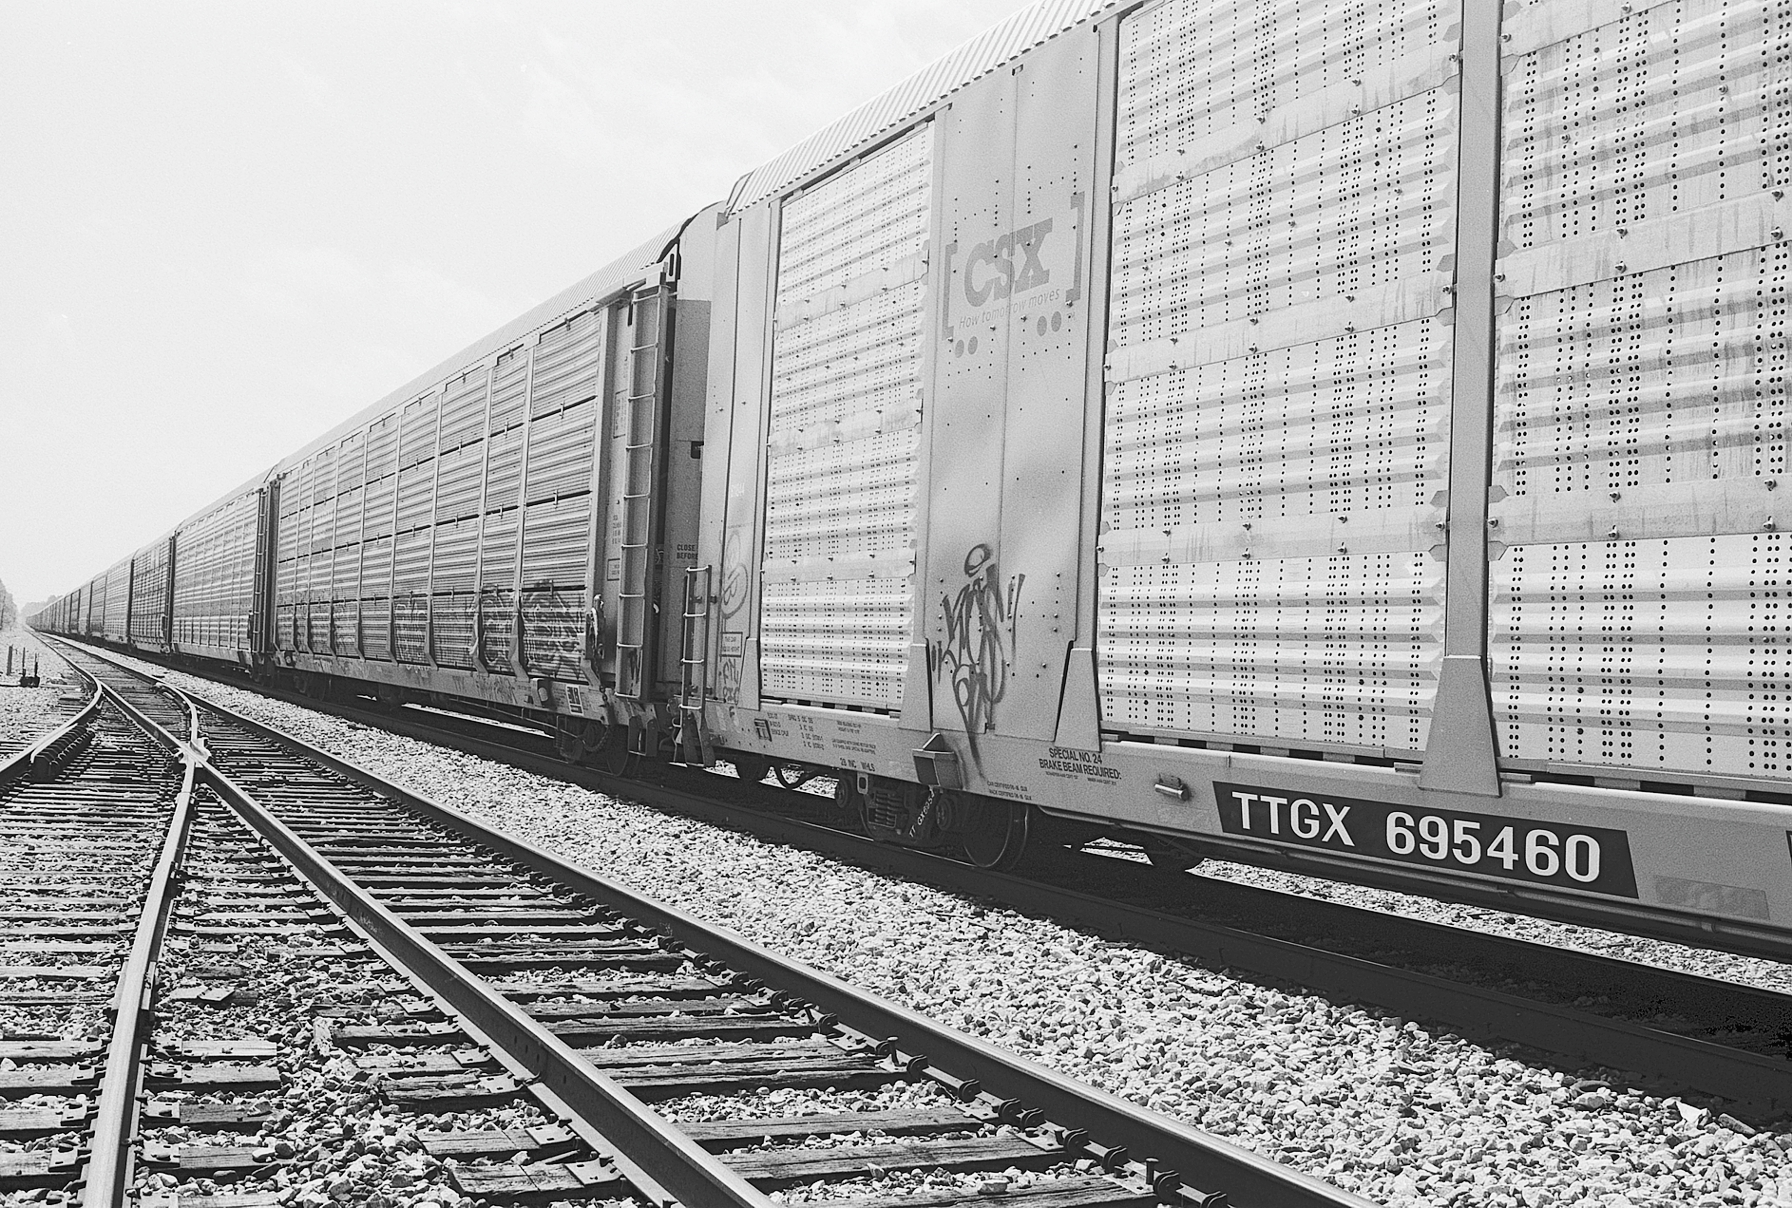 Railroad cars on a siding - Amory, Mississippi